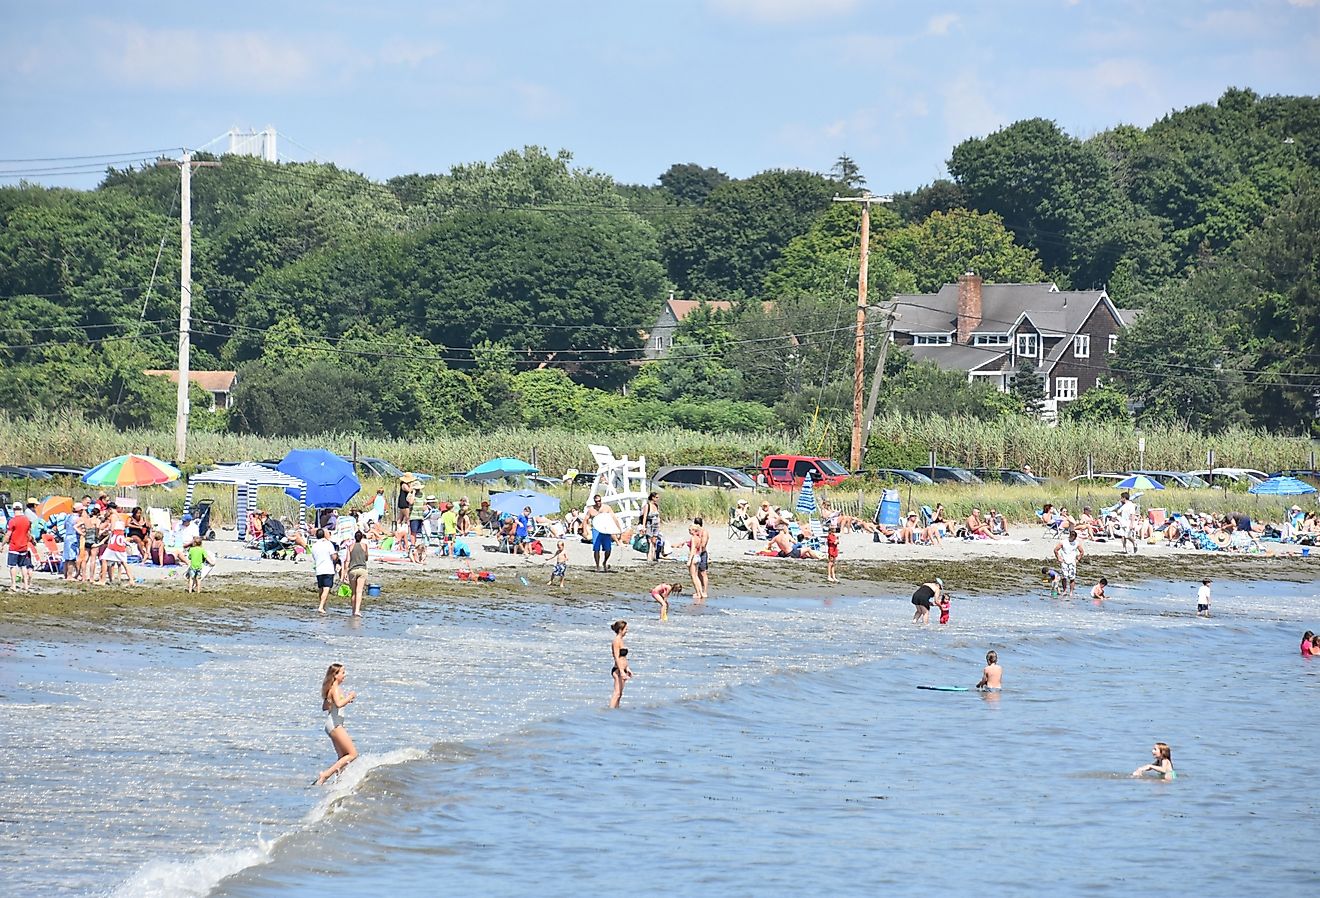 View of beach in Jamestown, Rhode Island. Image credit Ritu Manoj Jethani via Shutterstock.